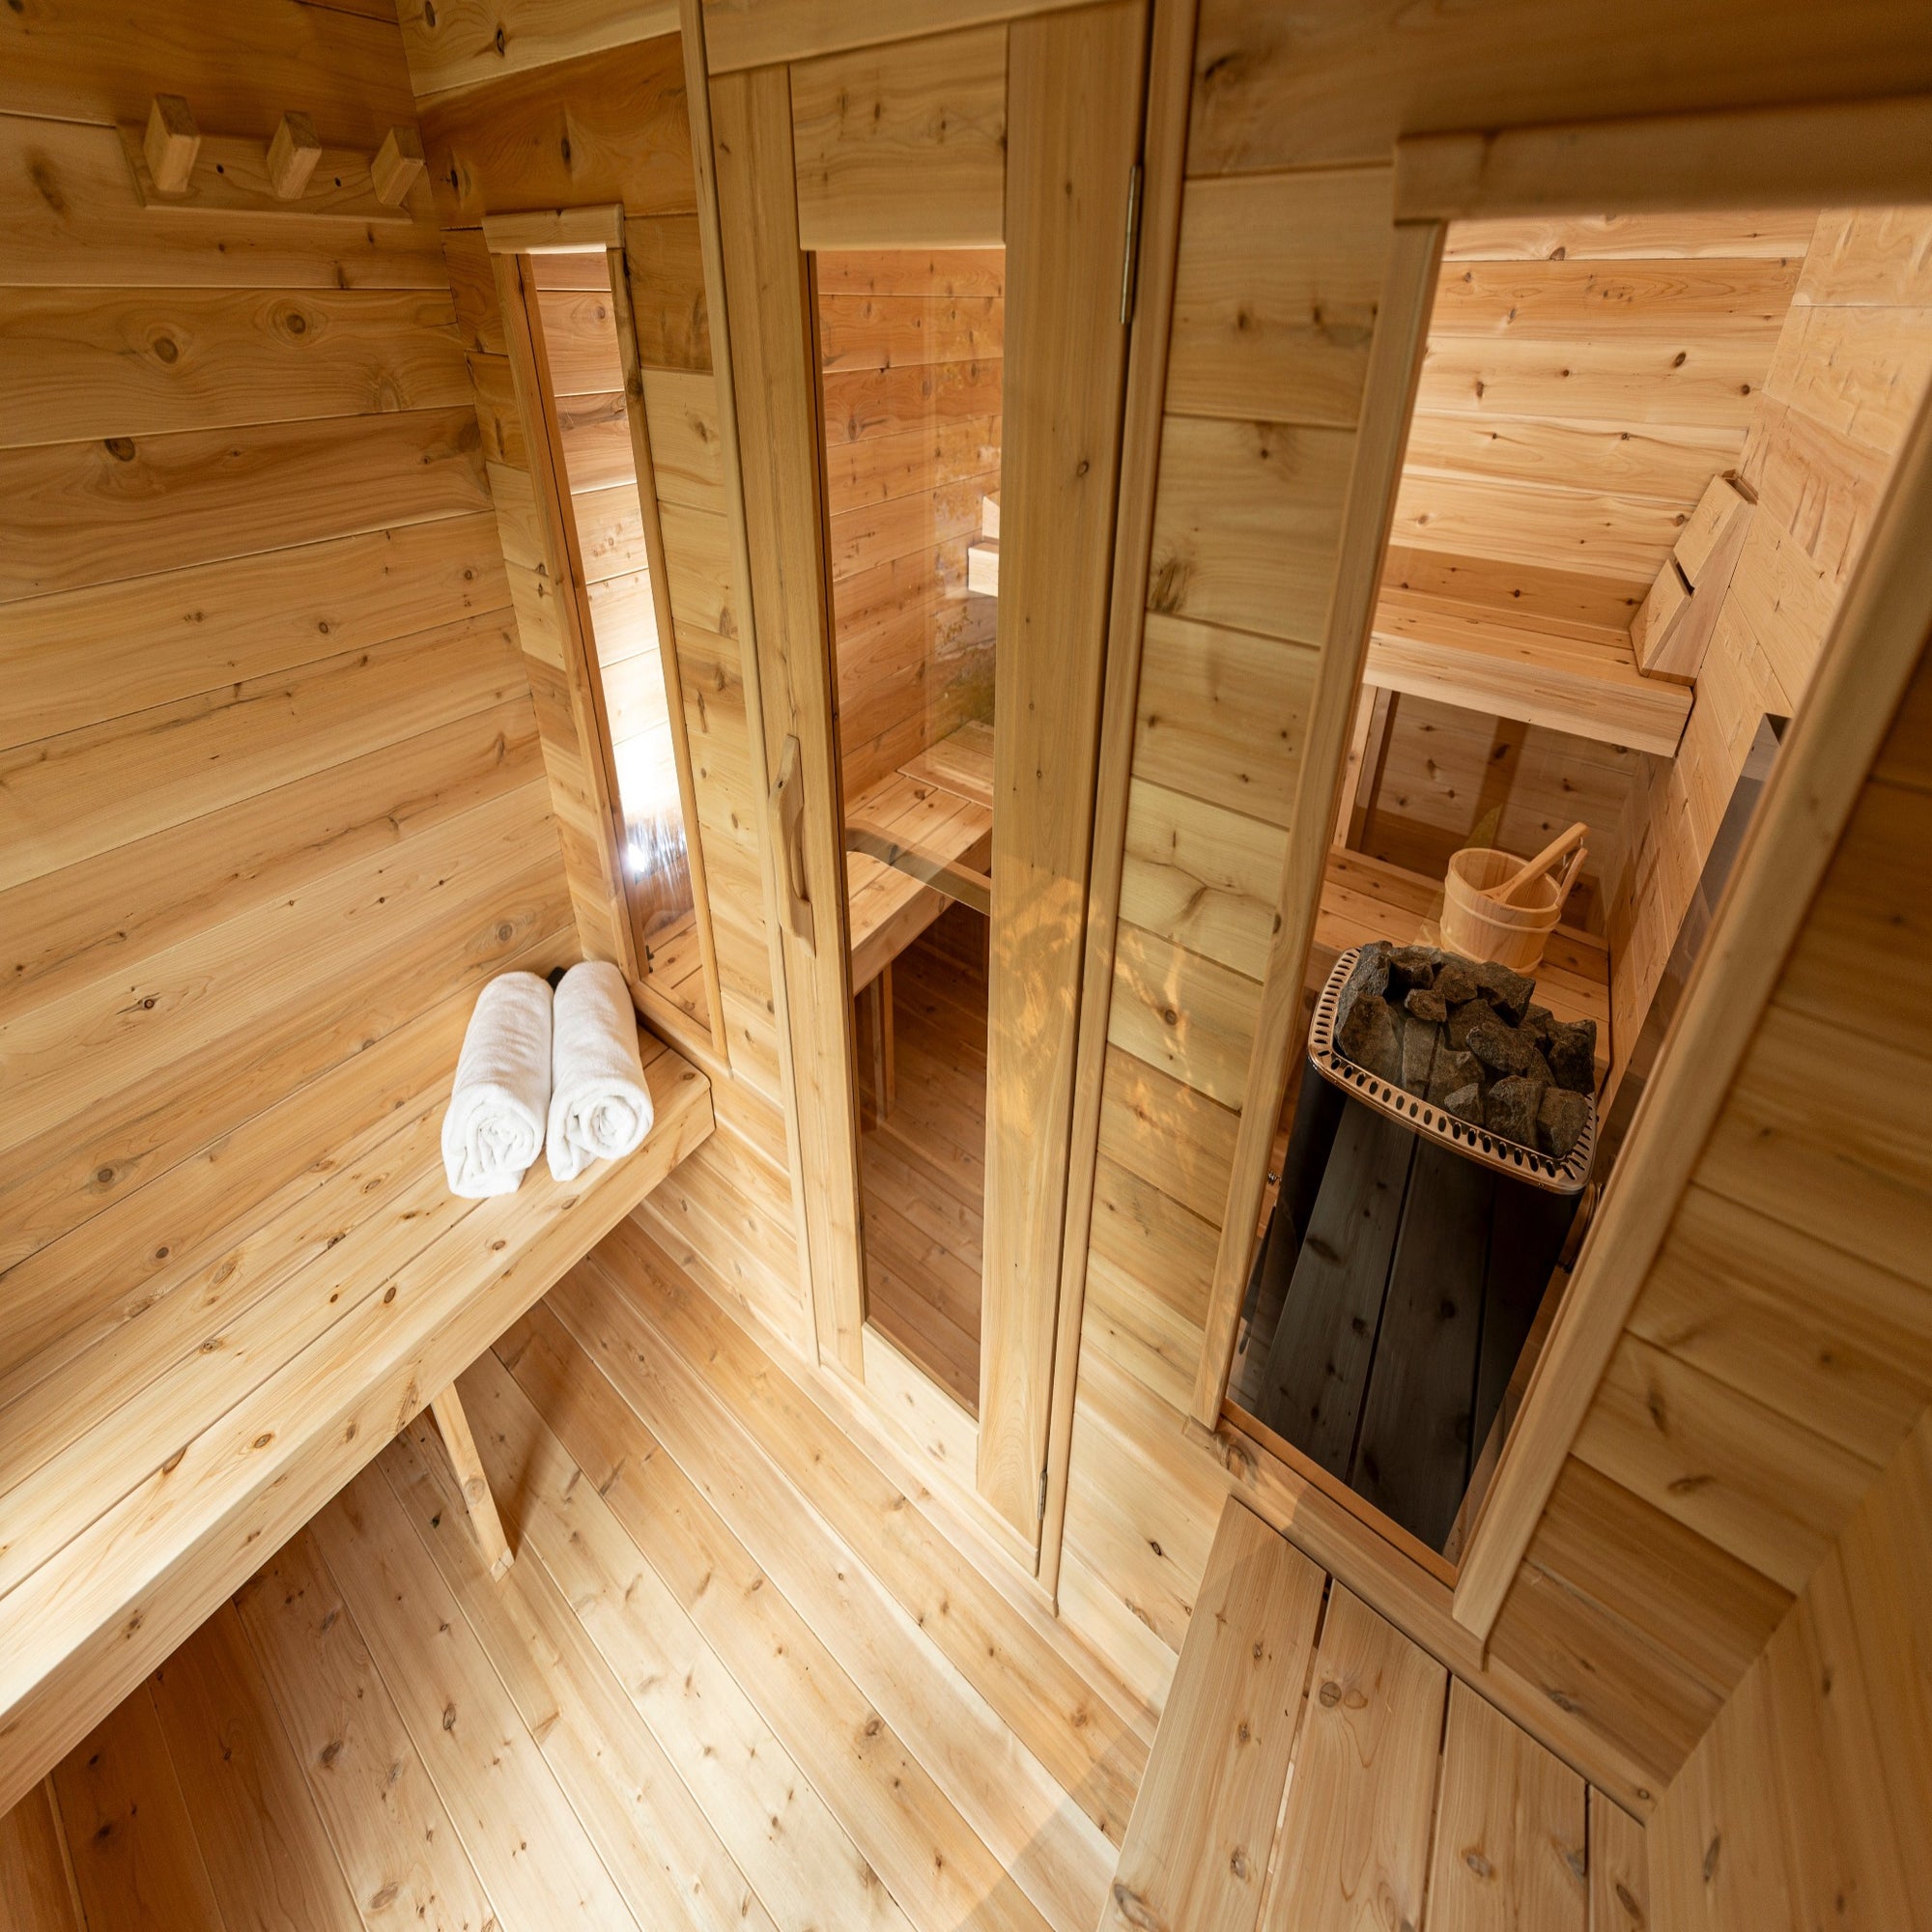 Leisurecraft Georgian Cabin Sauna with Changeroom